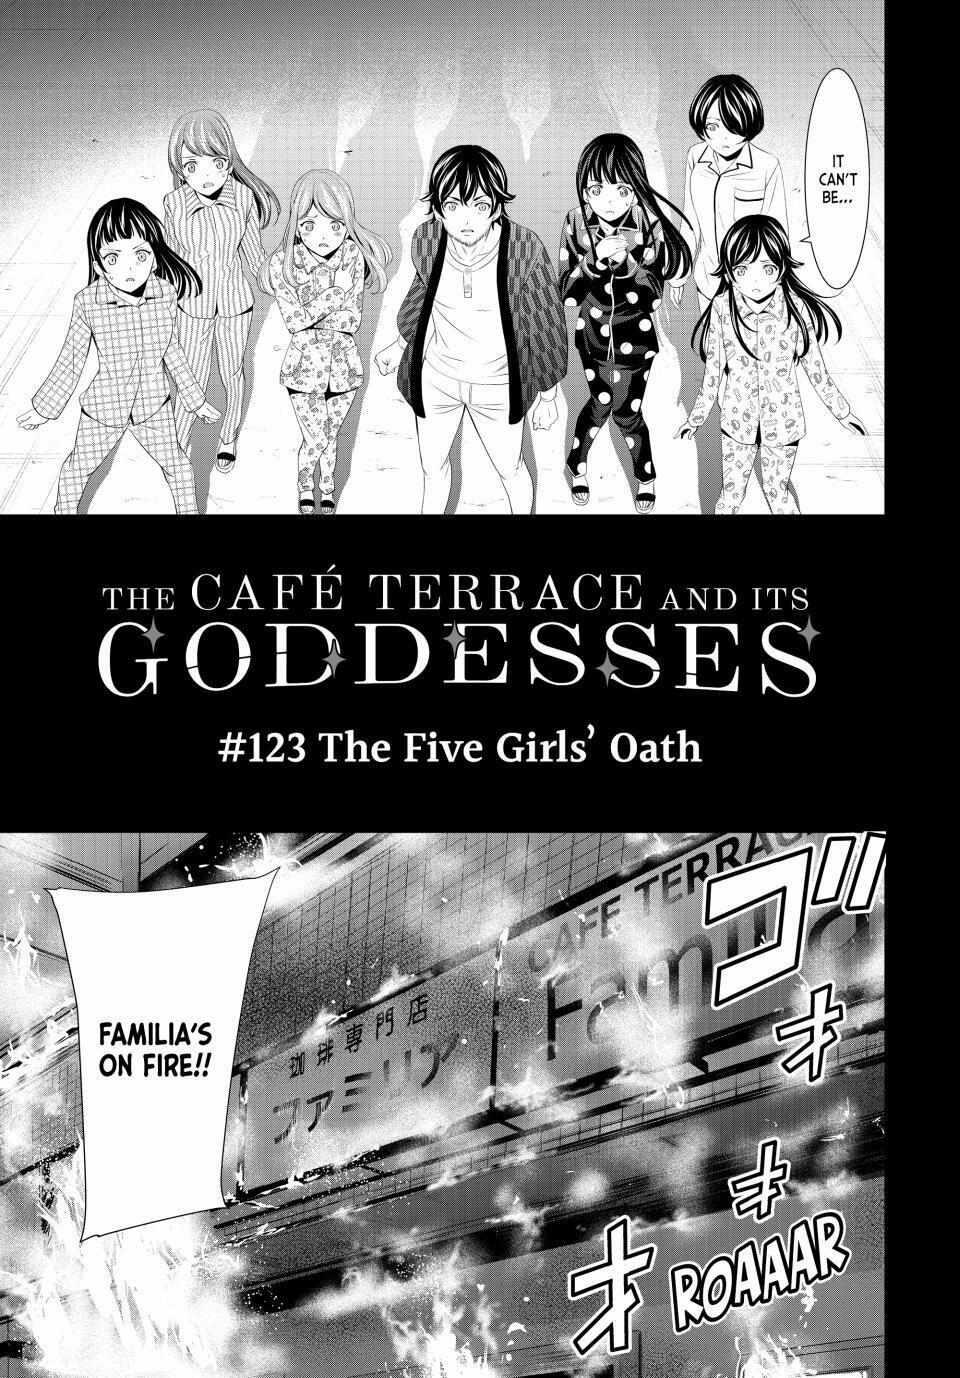 Read Goddess Café Terrace Chapter 59: Hot Spring Trip! - Manganelo